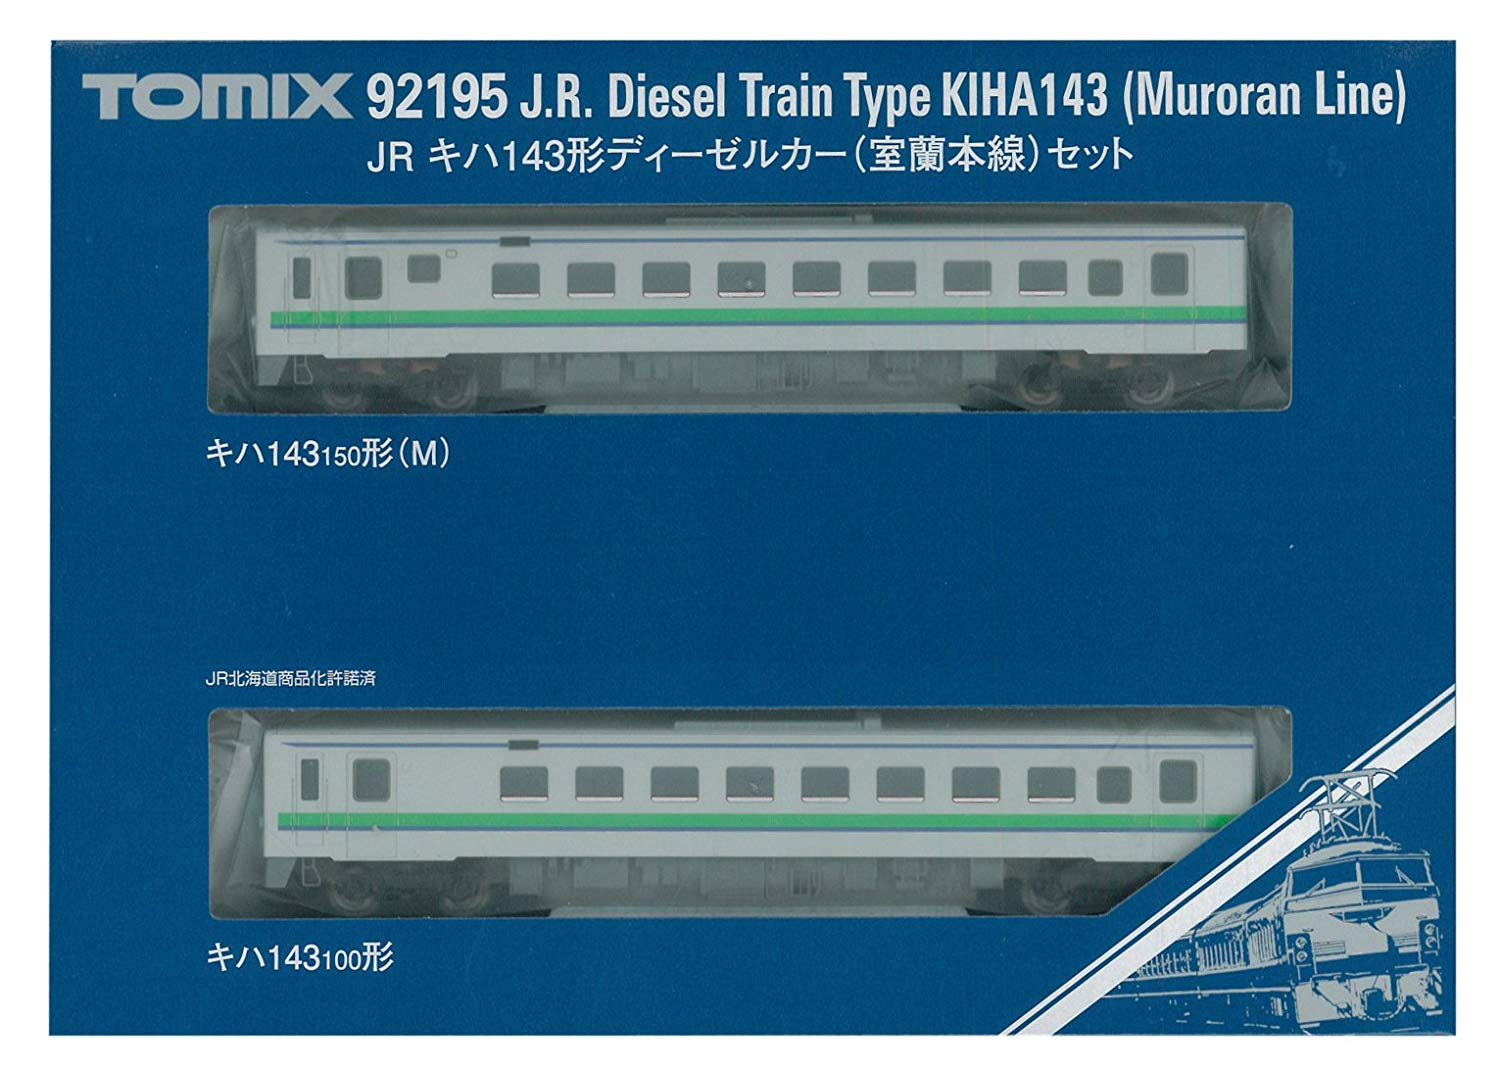 J.R. Diesel Train Type KIHA143 (Muroran Line) (2-Car Set)